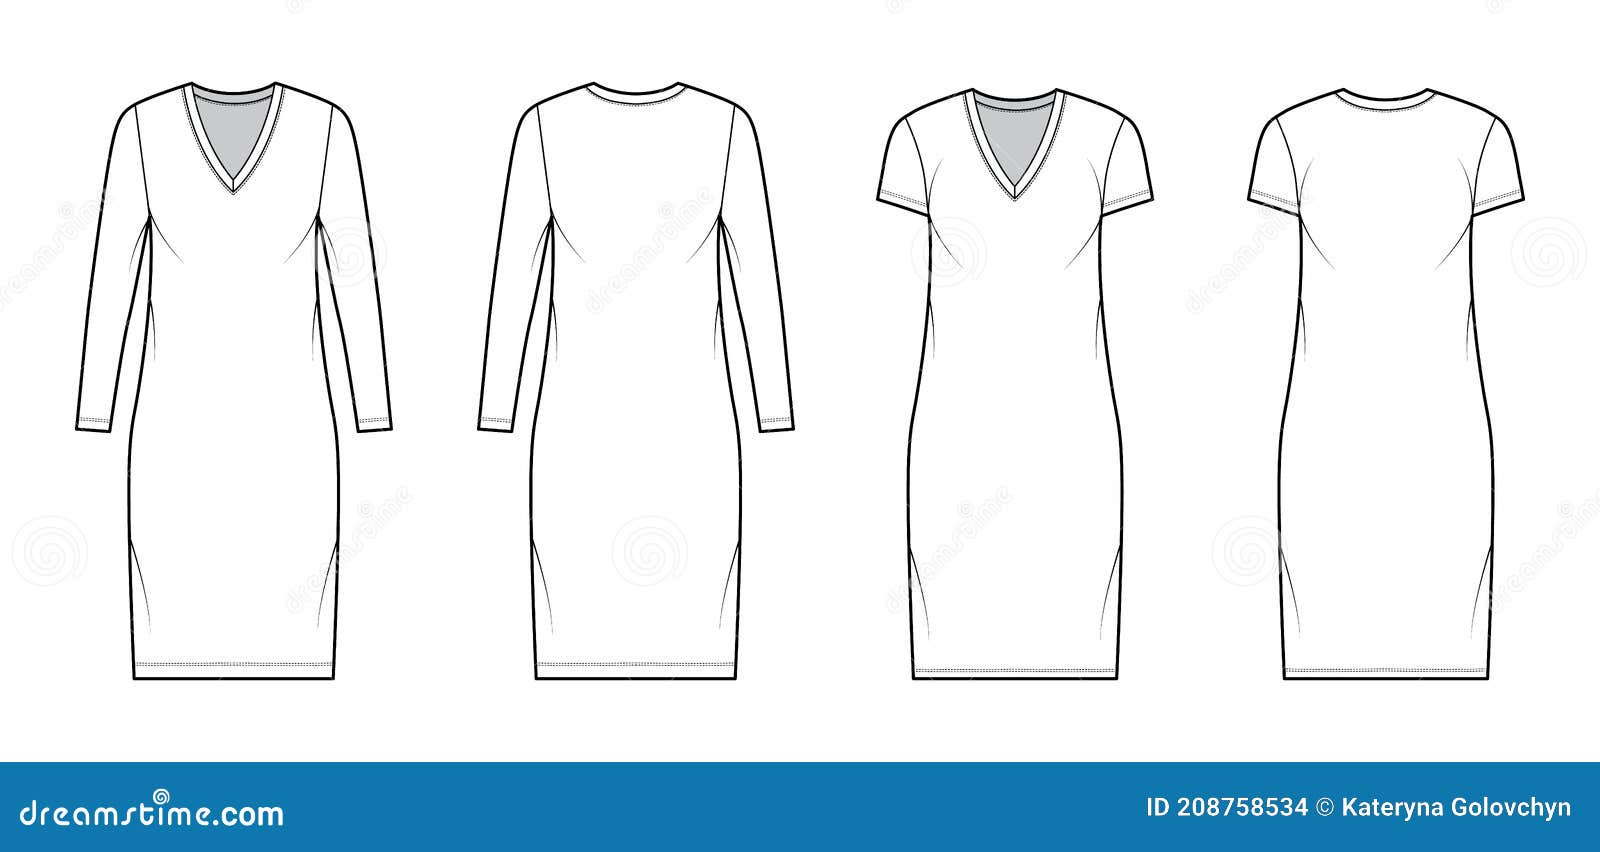 T-shirt Dress Technical Fashion Illustration with V-neck, Long, Short ...